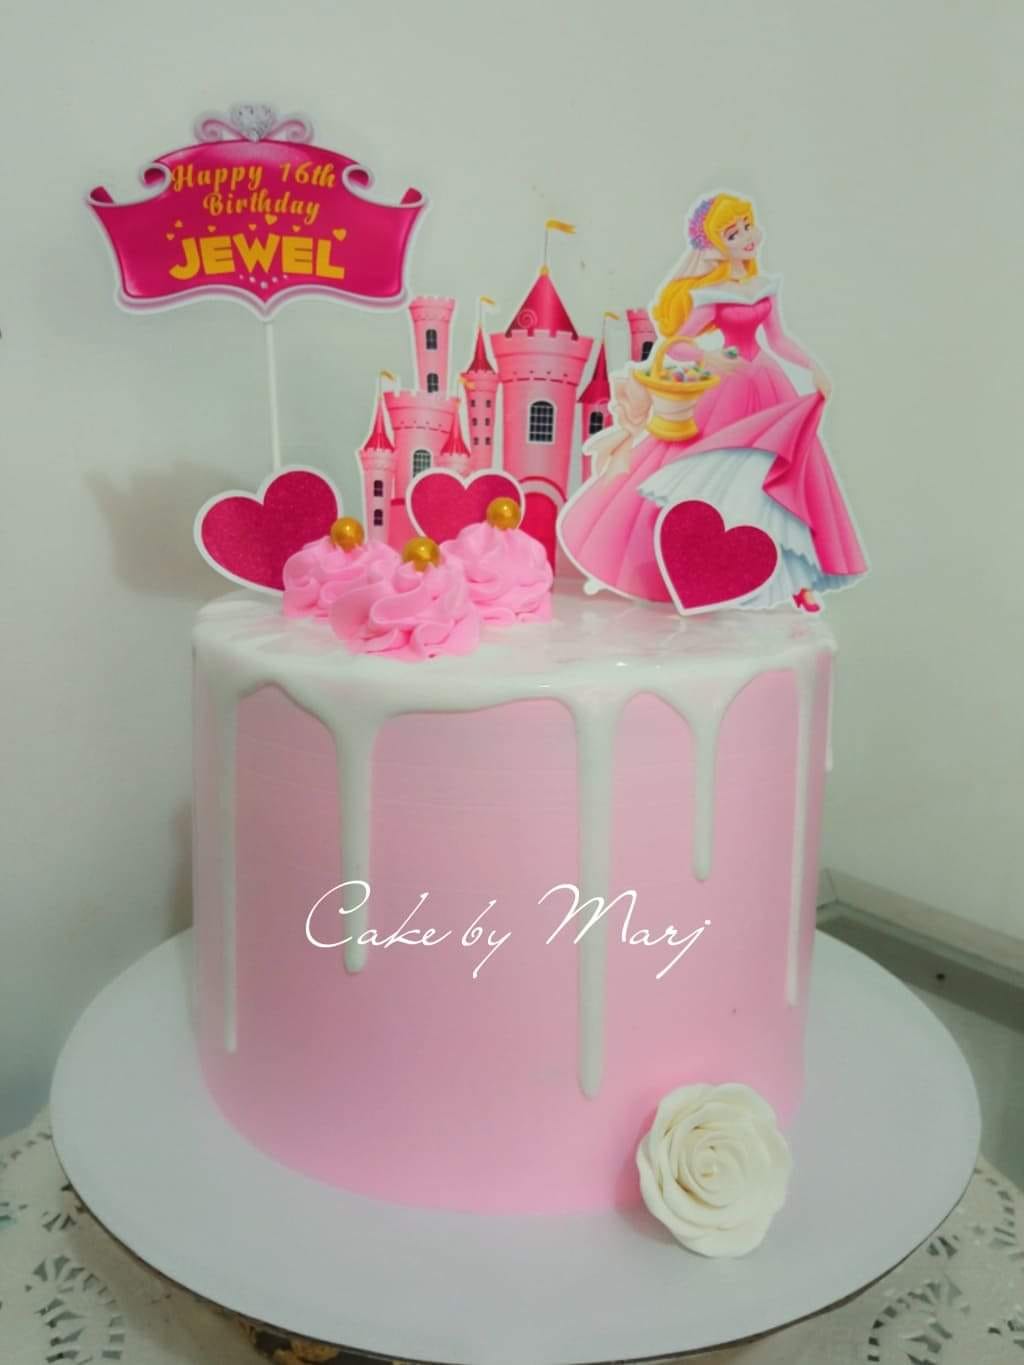 Sev's Cake Brussels (sevscakebxl) - Profile | Pinterest